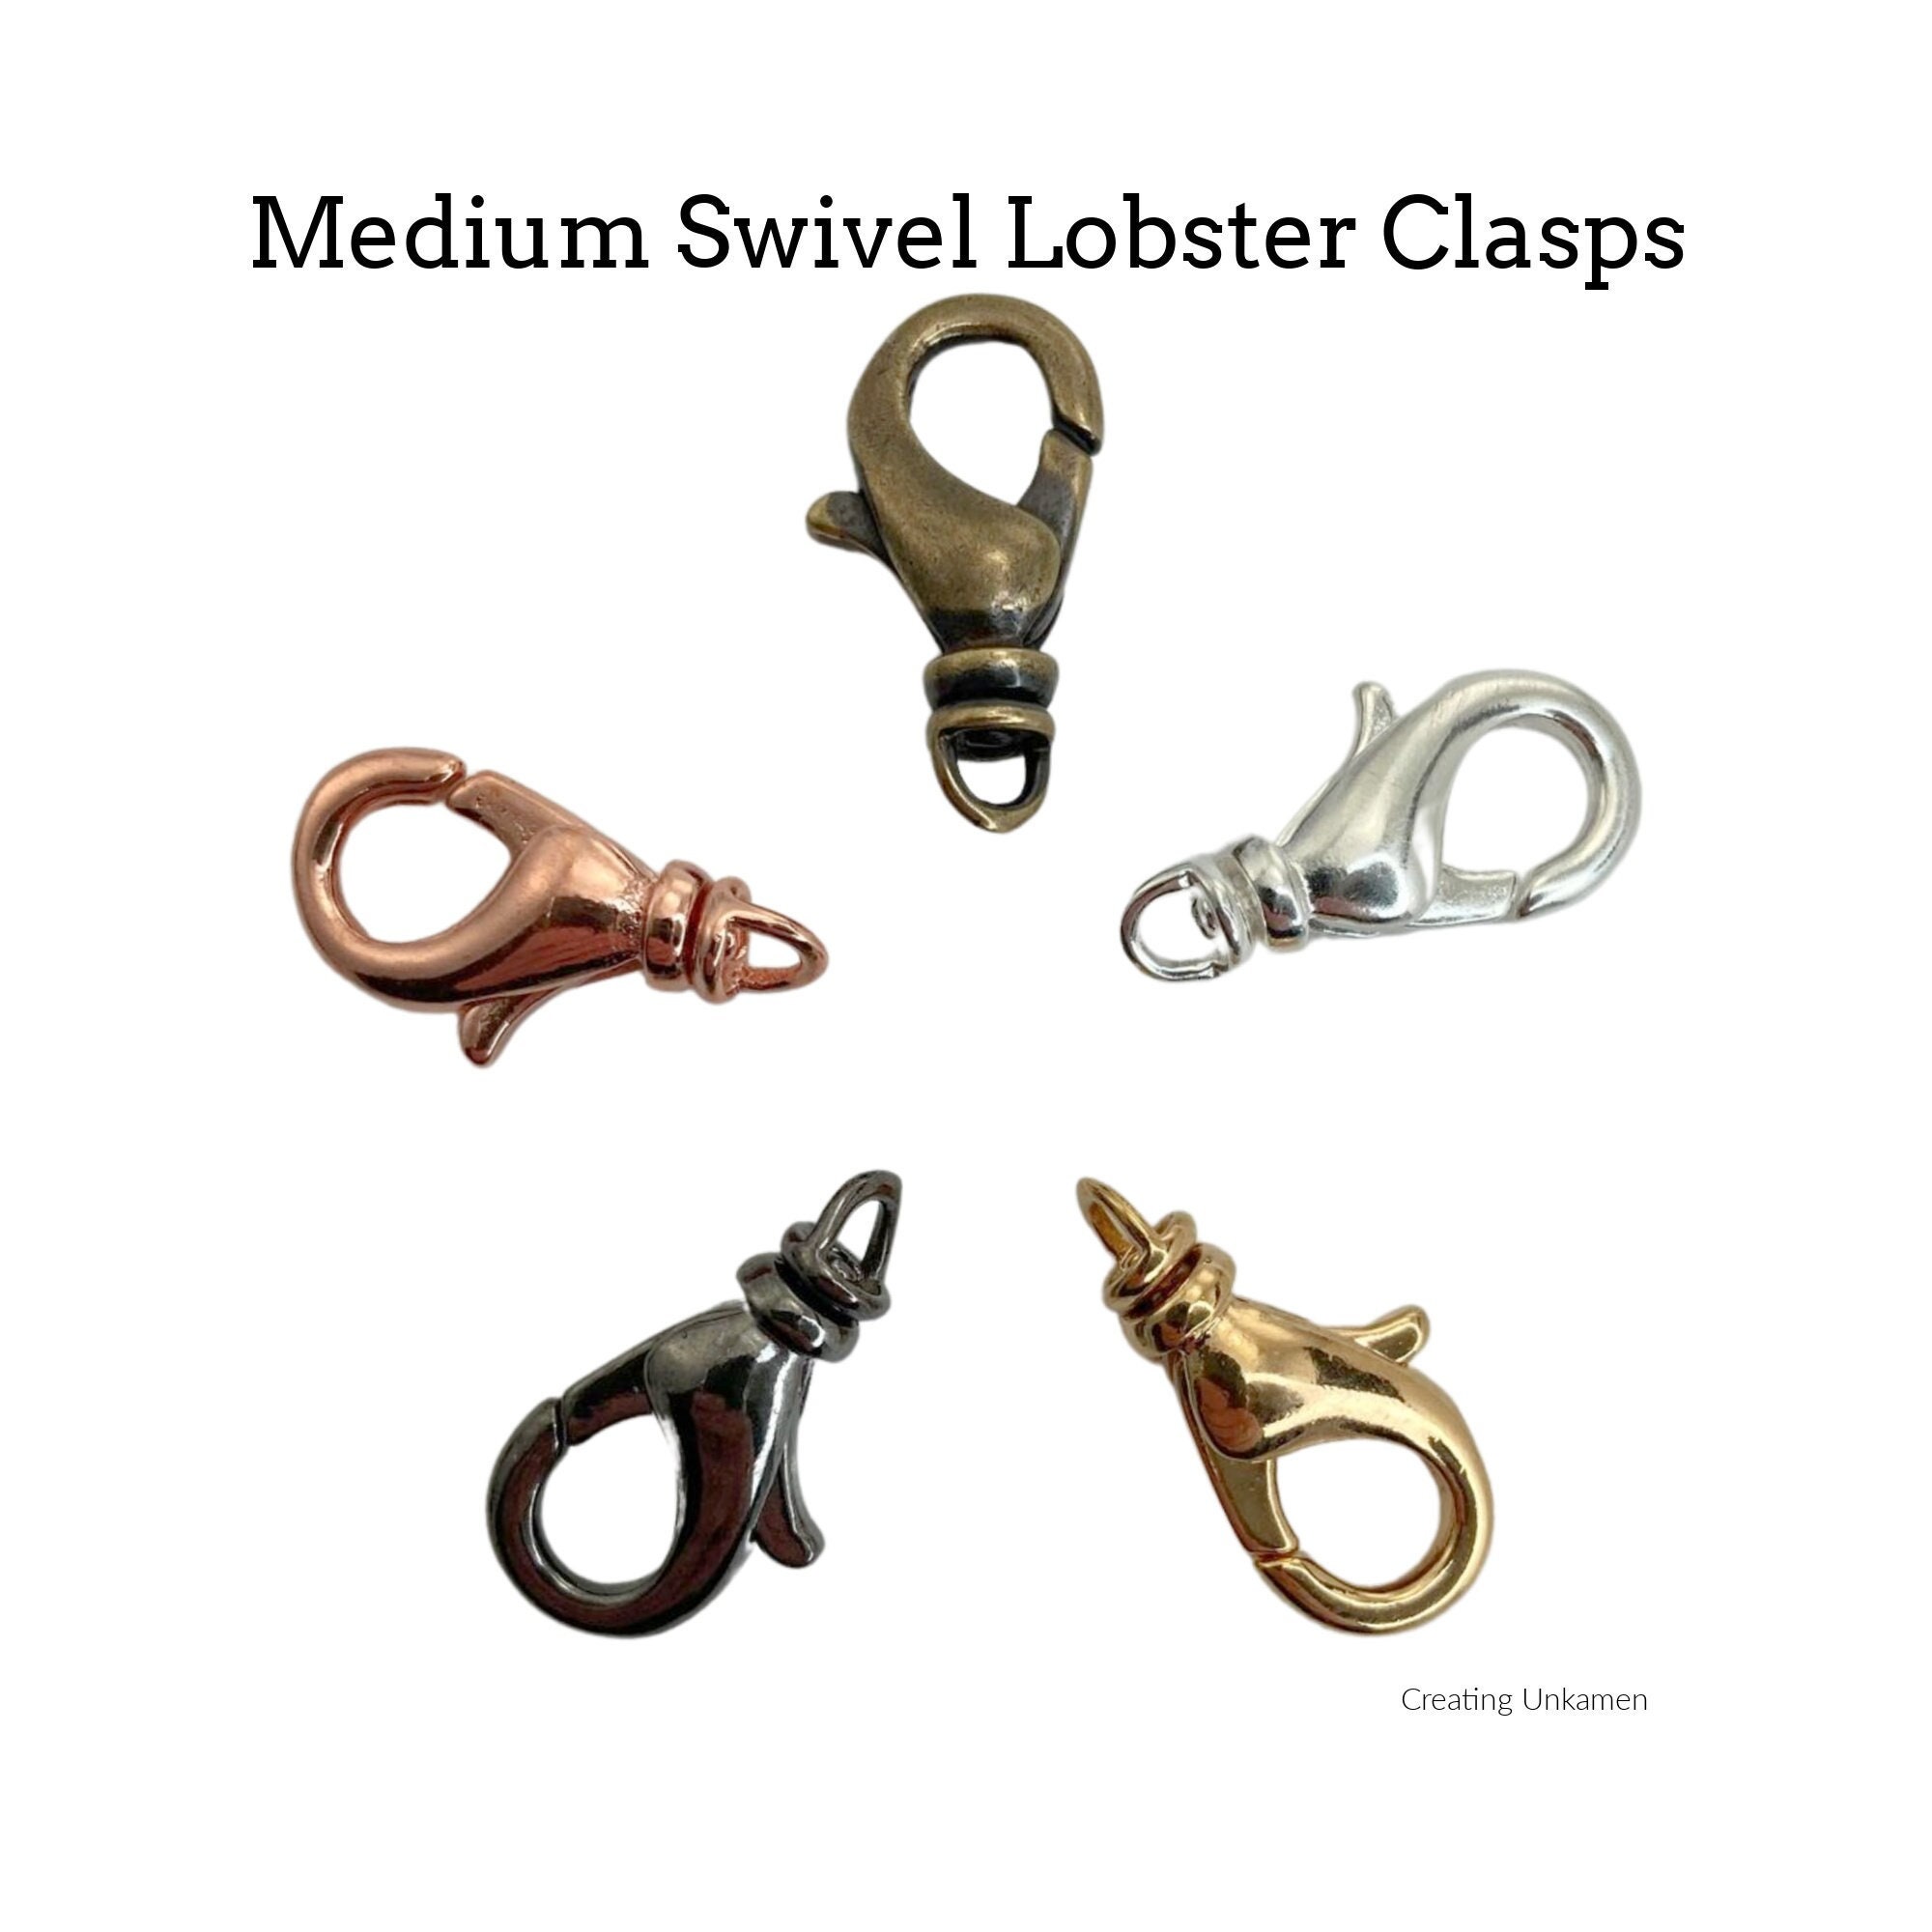 10 X Key Chain Supplies, Swivel Clasp, Key Clip, Big Lobster Clasp